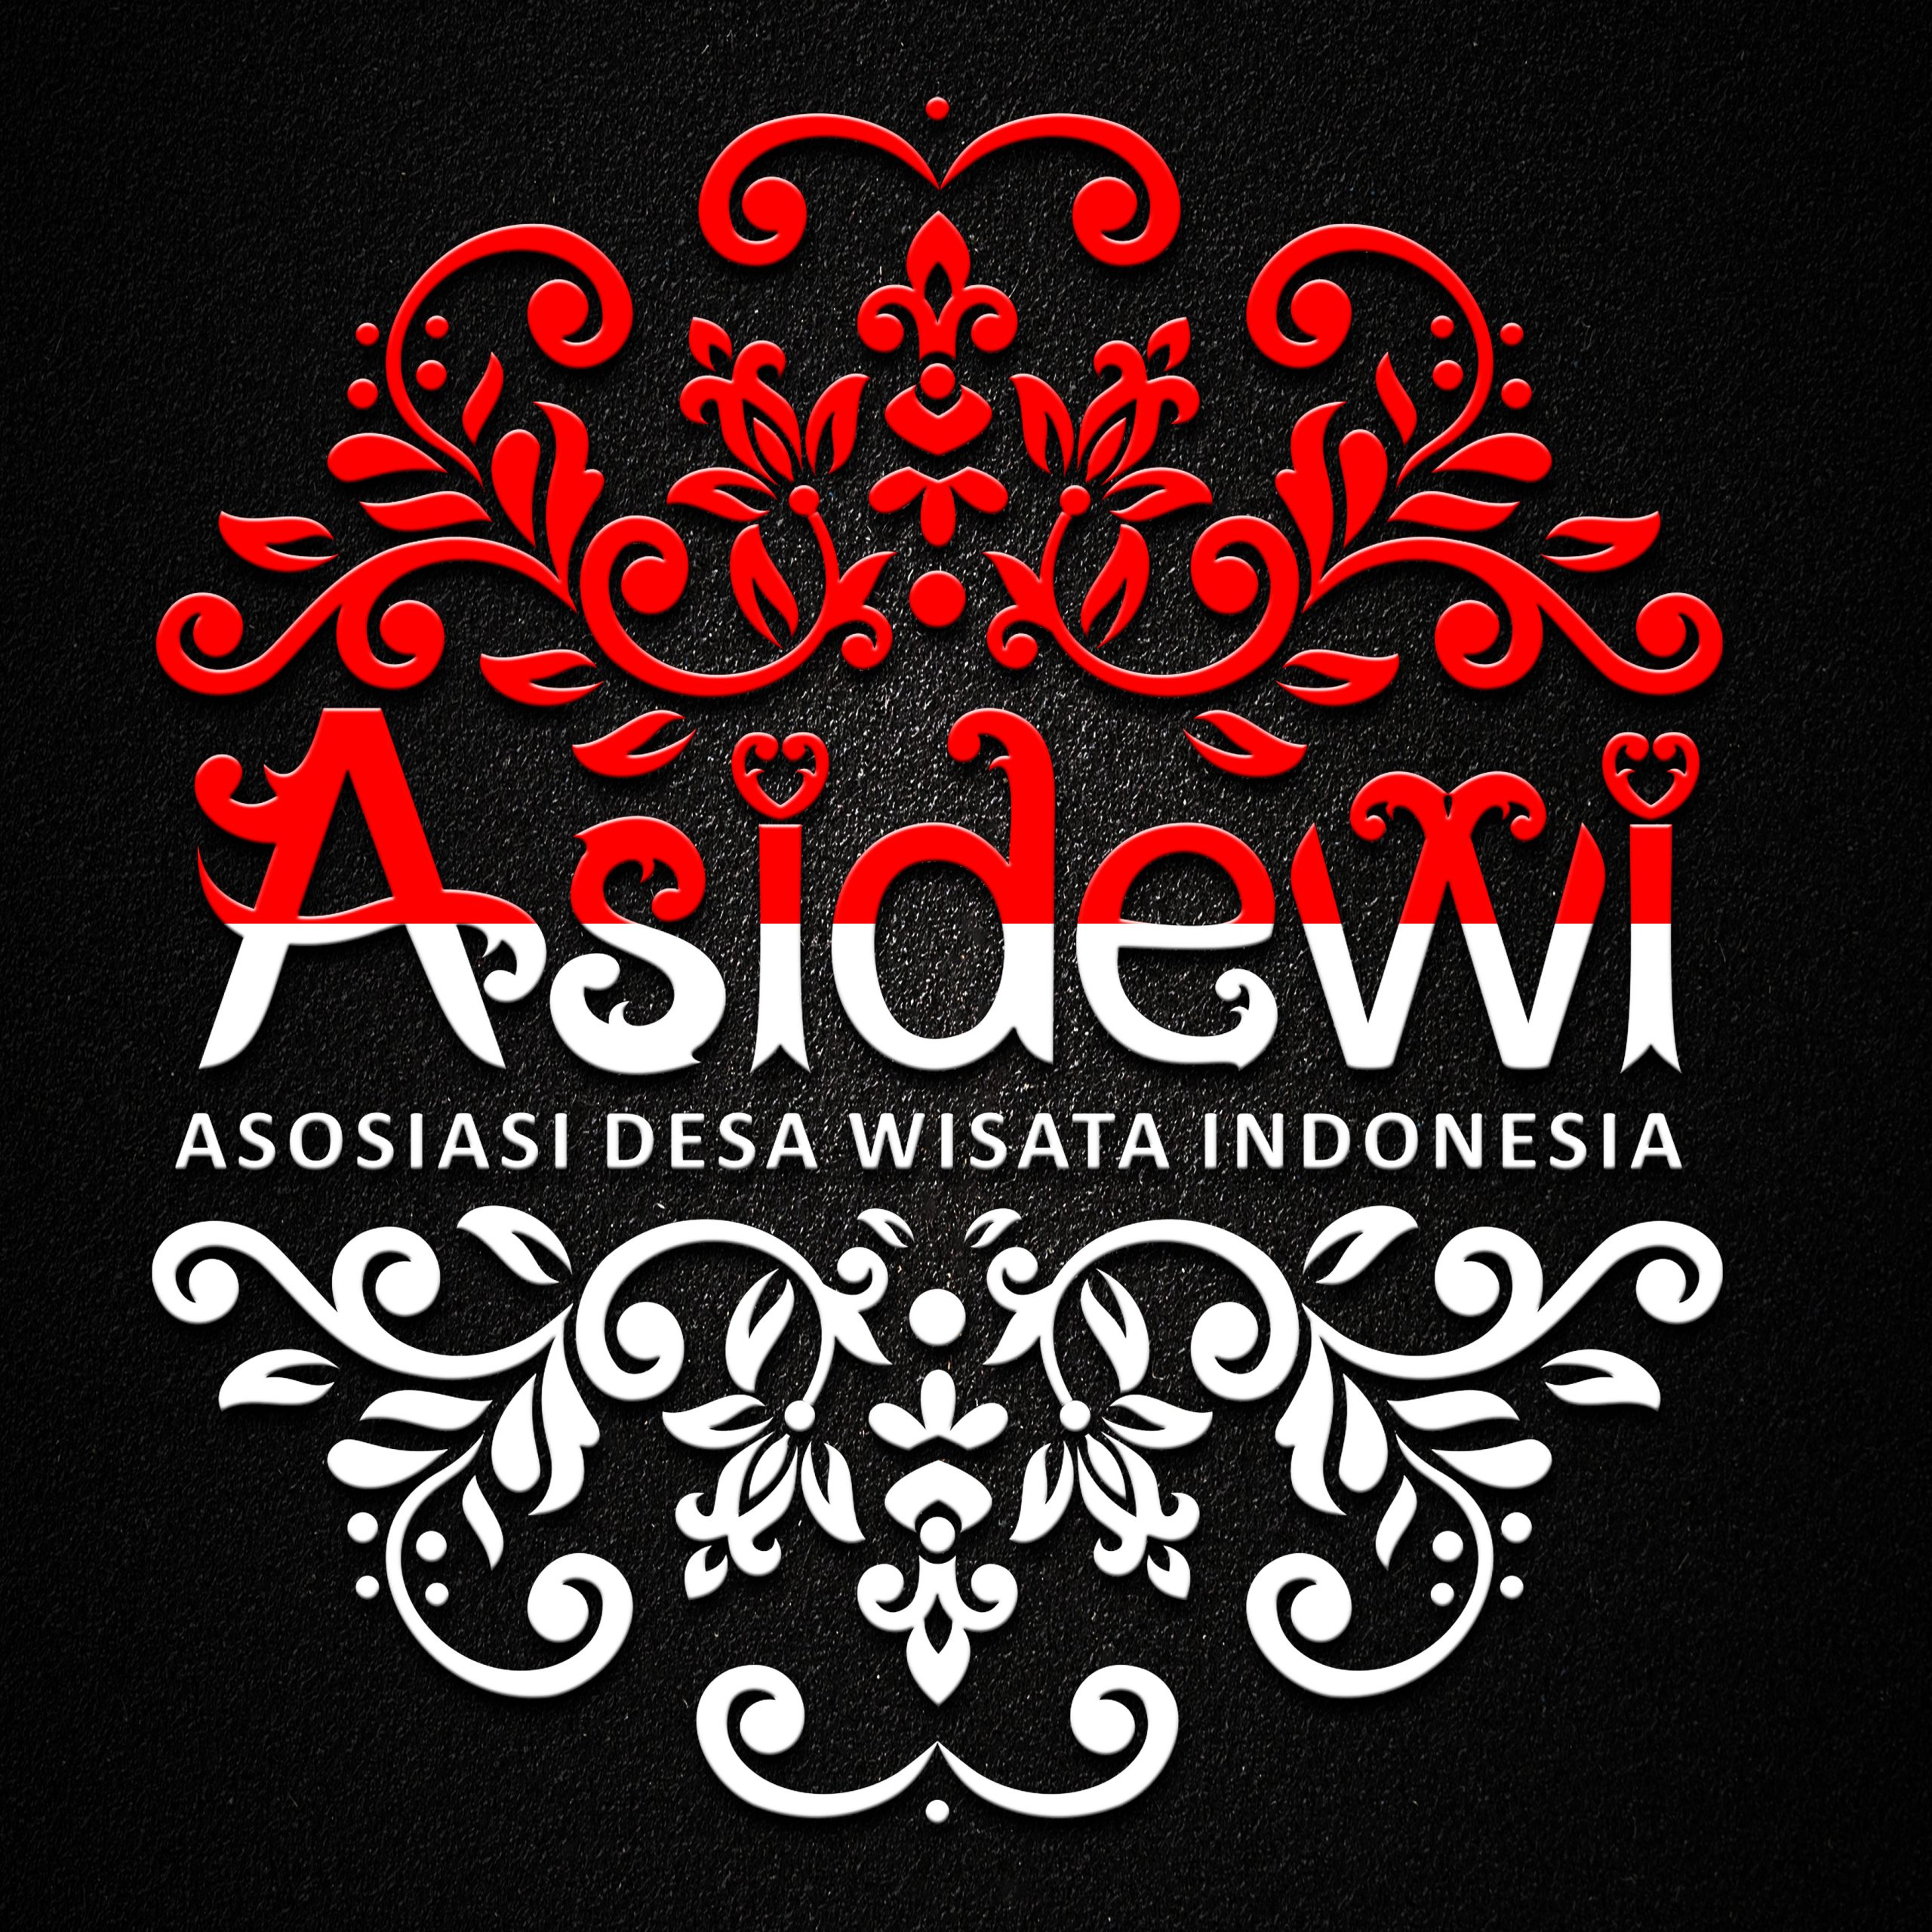 asidewi_merah_putih_copy1